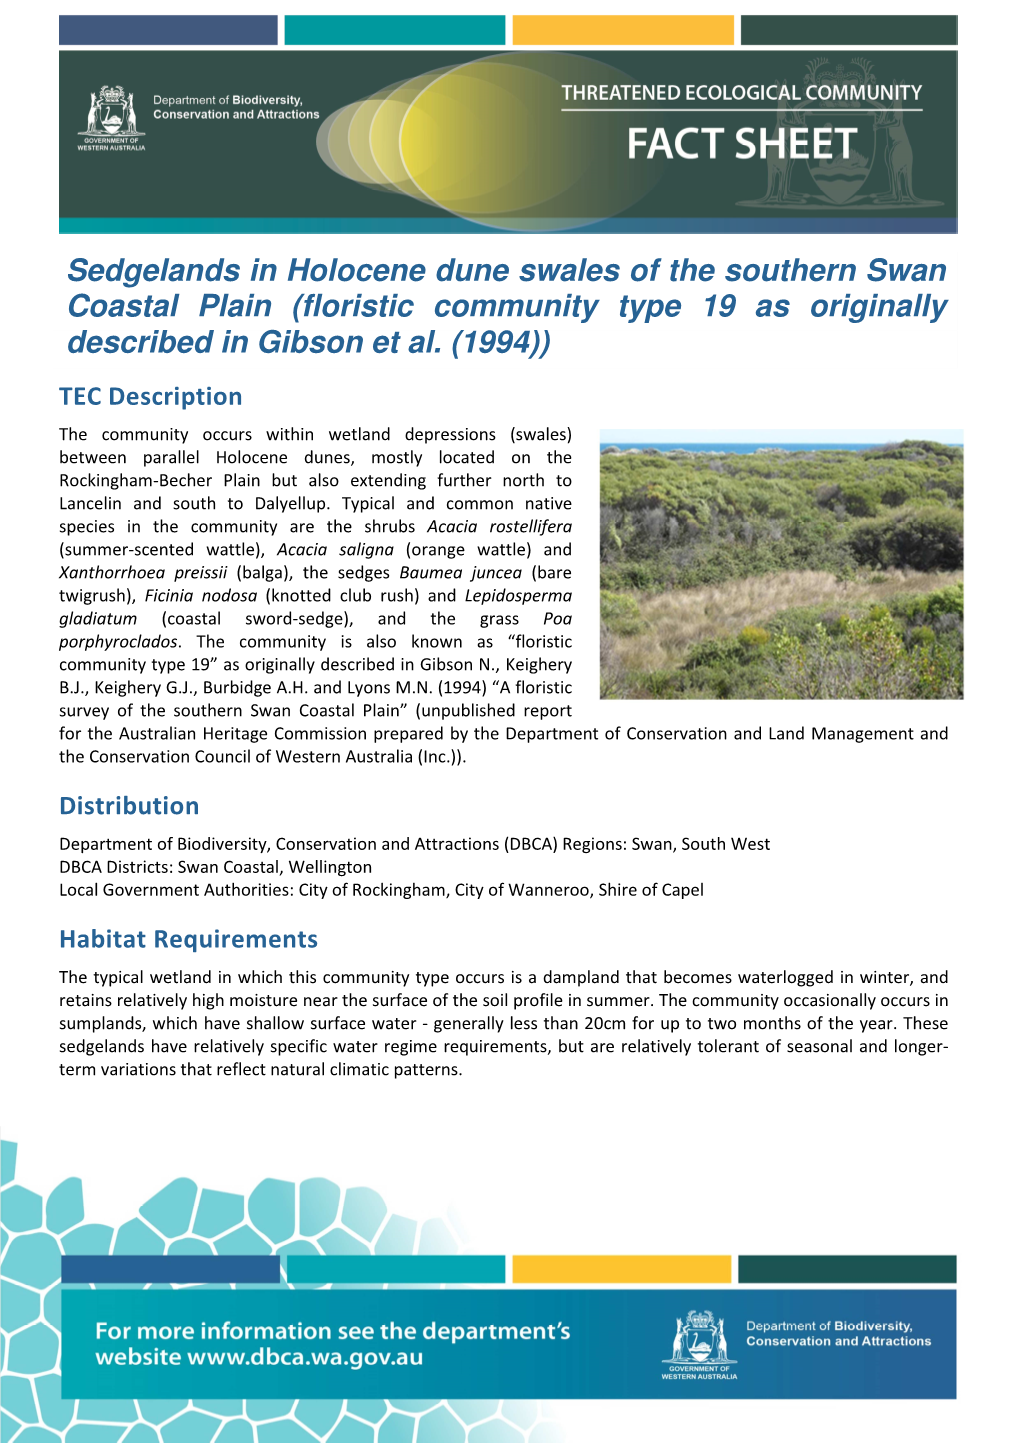 Sedgelands in Holocene Dune Swales of the Southern Swan Coastal Plain (Floristic Community Type 19 As Originally